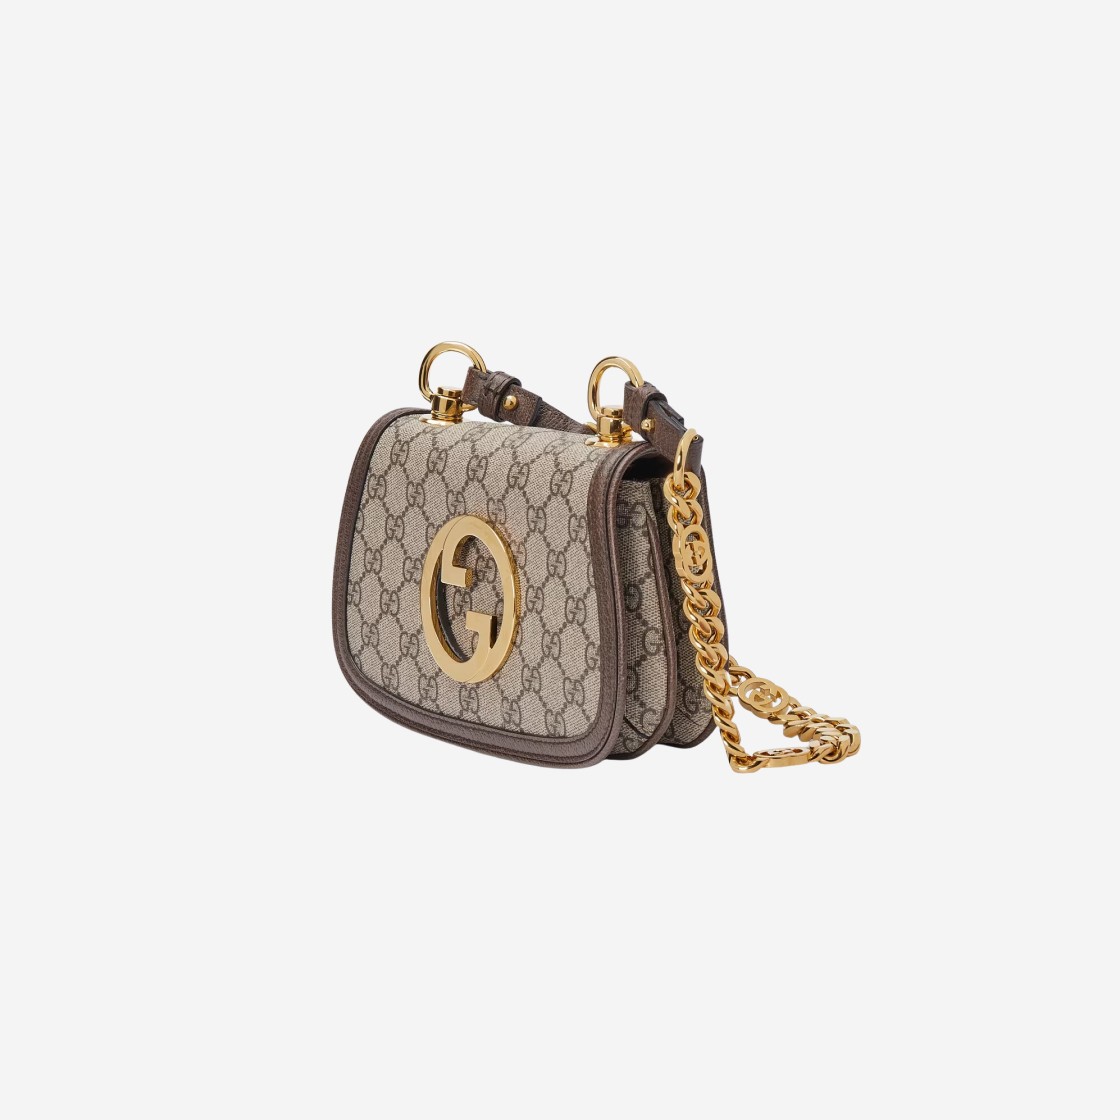 Gucci Blondie shoulder bag in beige and ebony Supreme